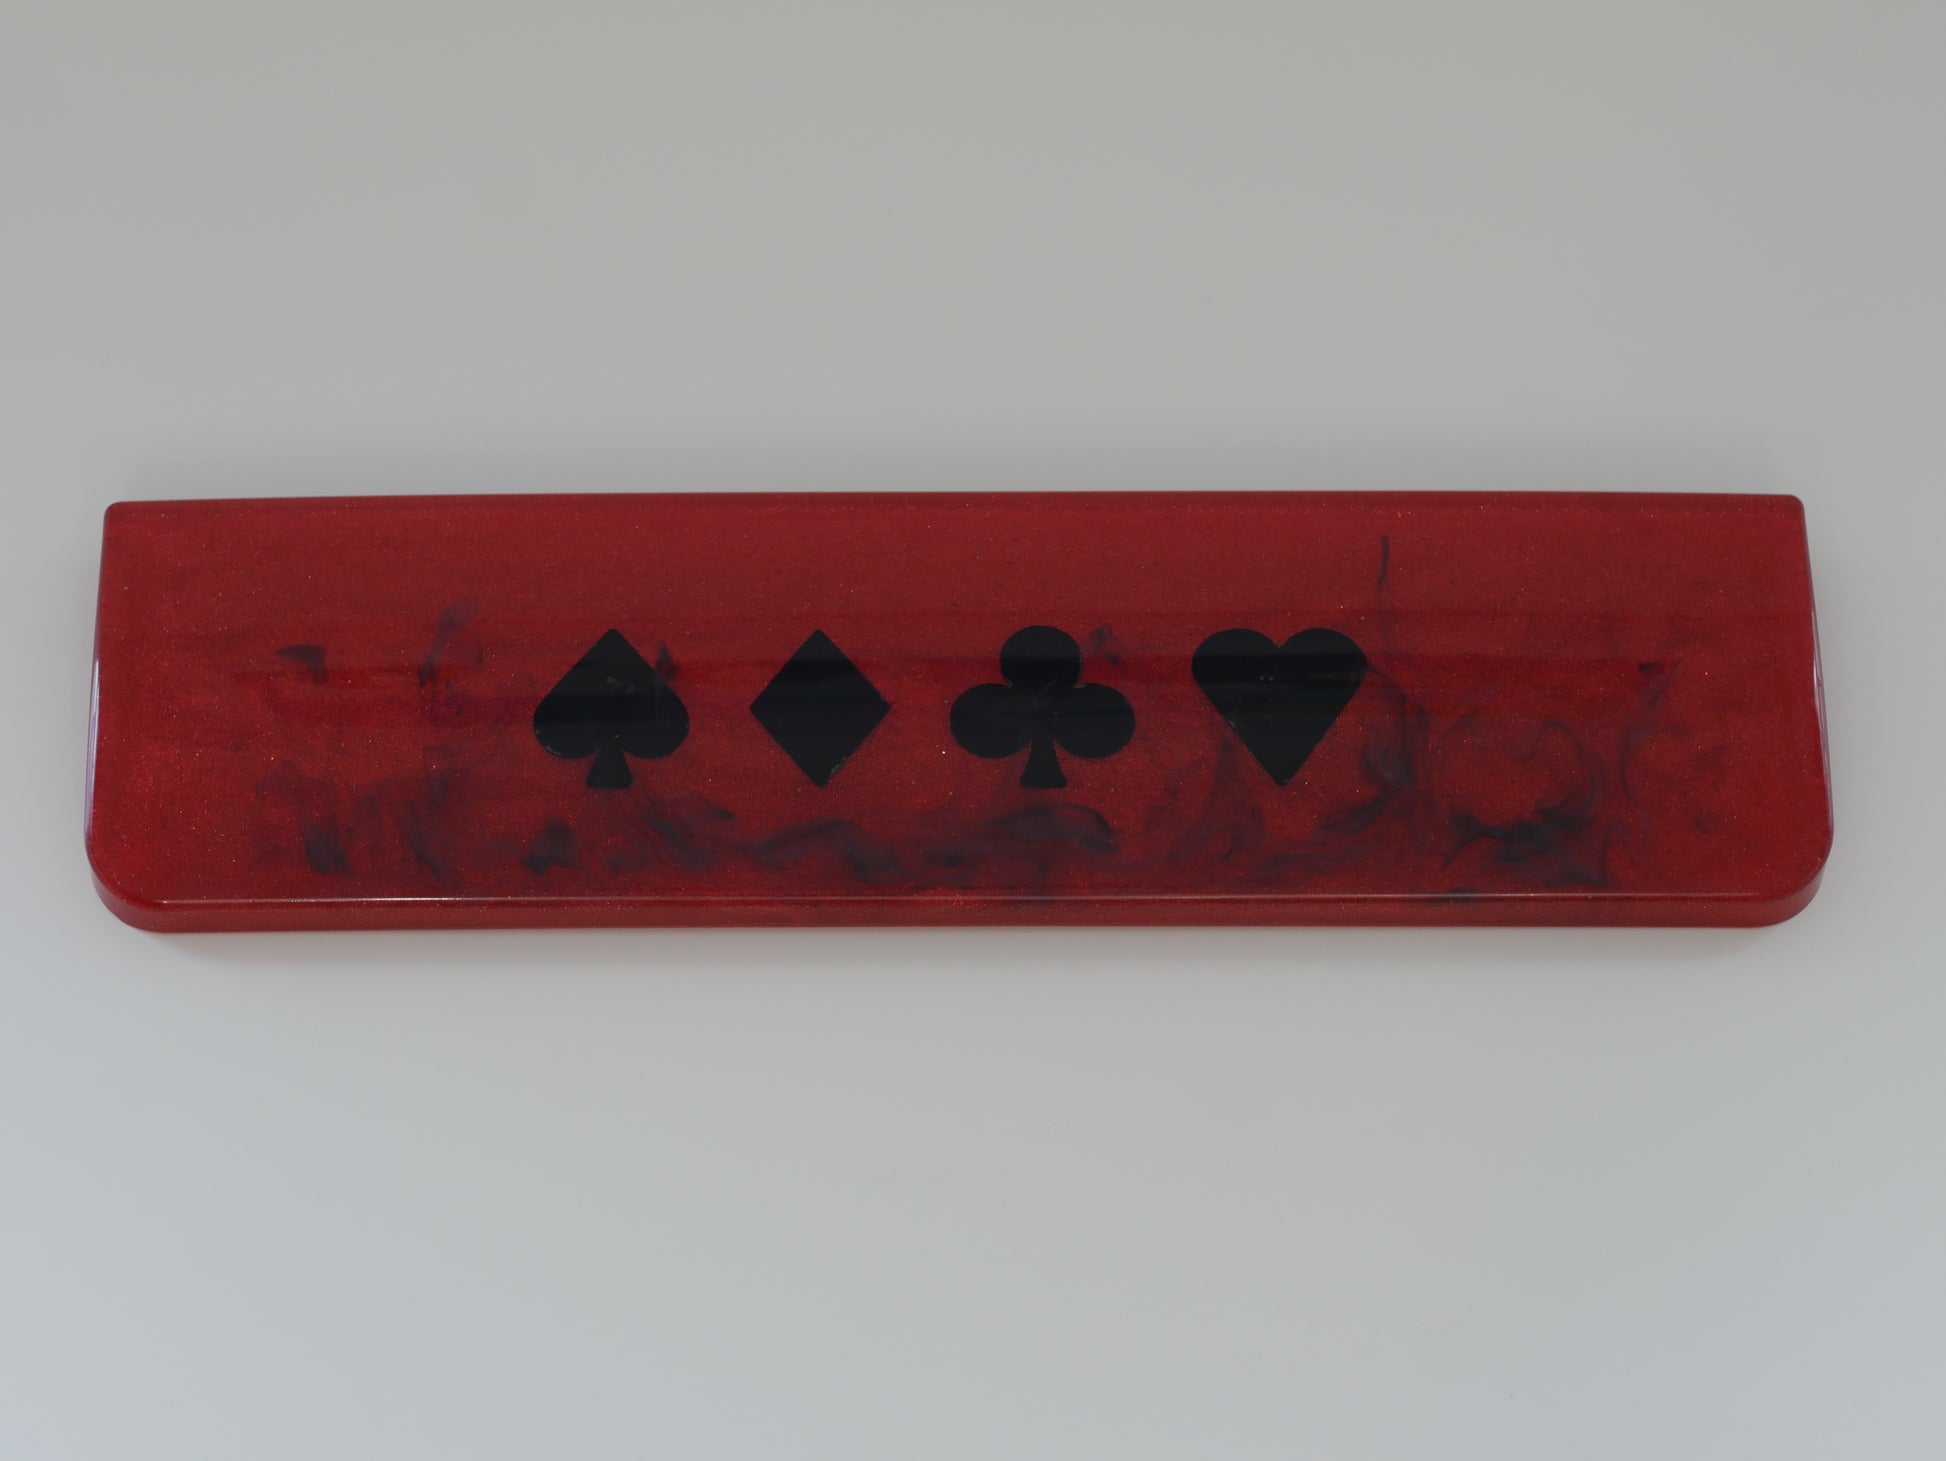 Smokin' Suits Resin Keyboard Wrist Rest - Red/Black (11.75" x 3") - Desk Cookies